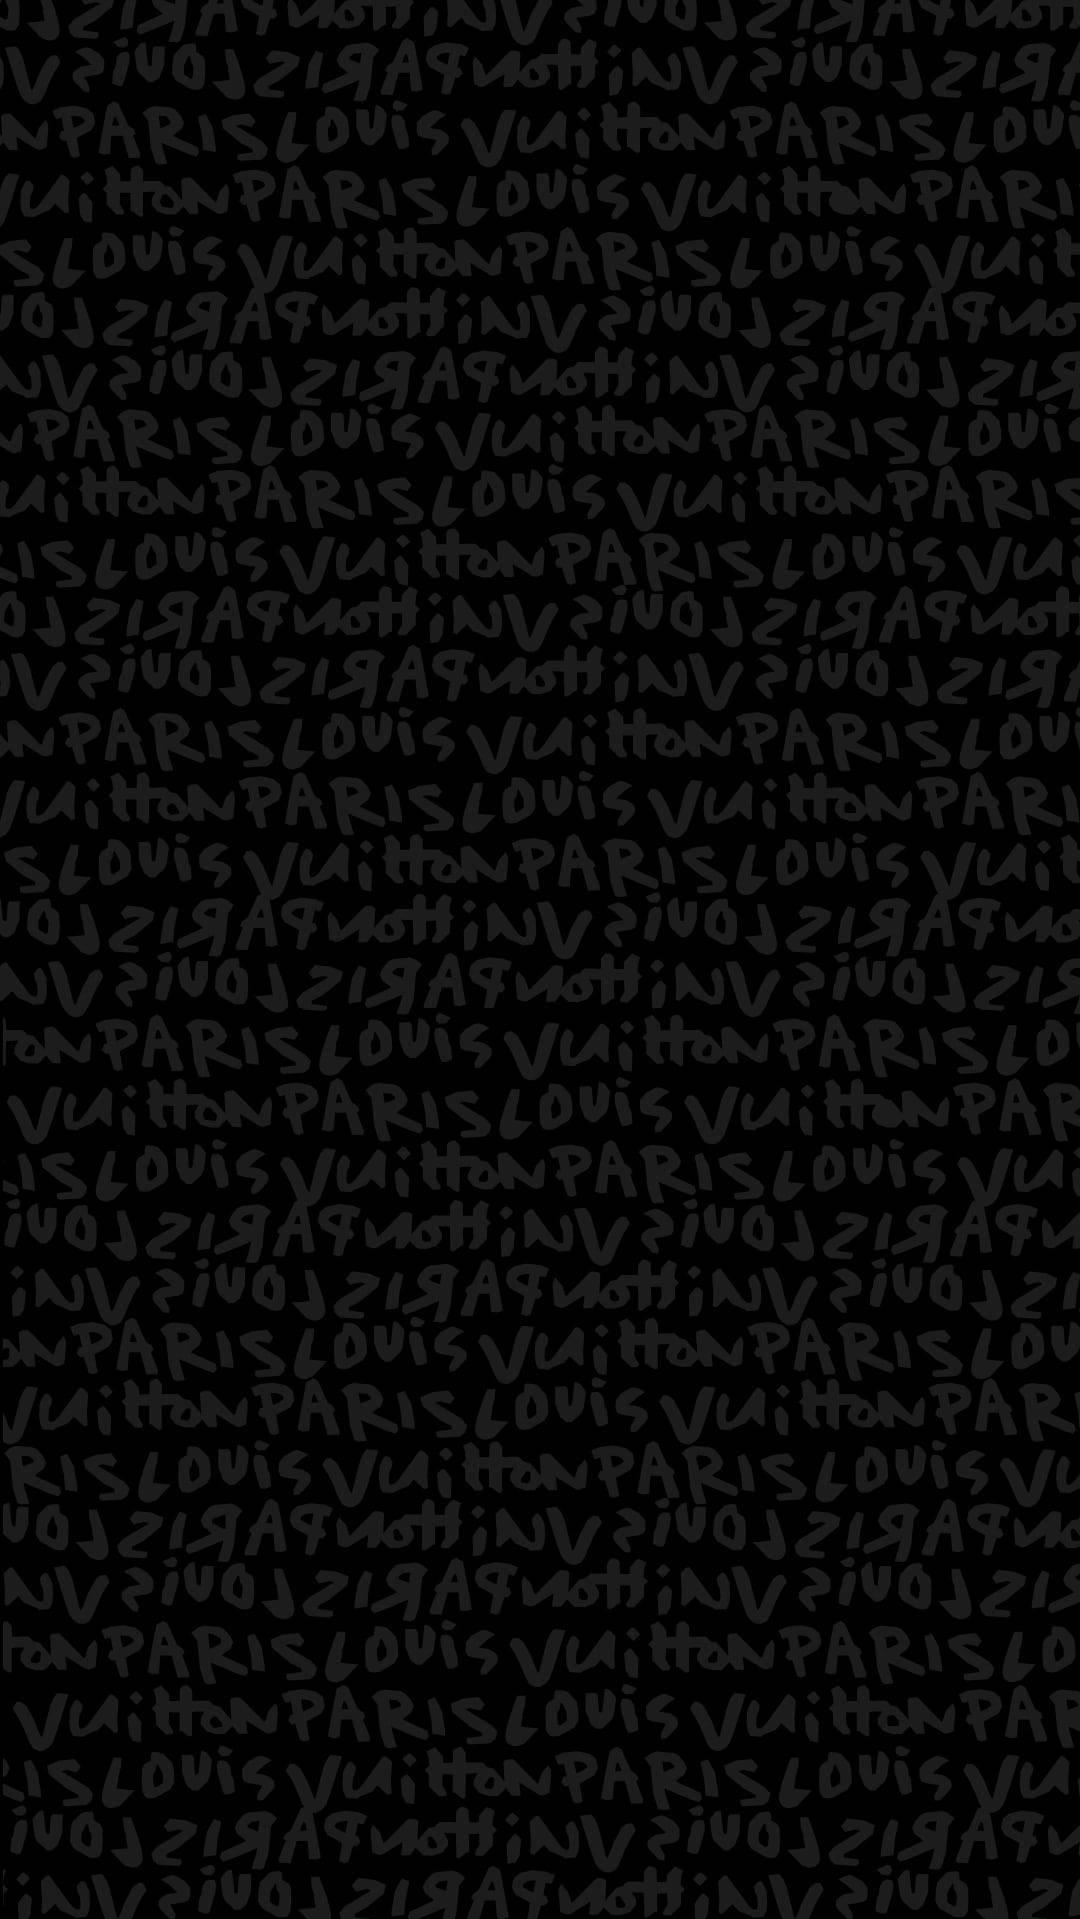 Dark Aesthetic Louis Vuitton Phone Wallpaper